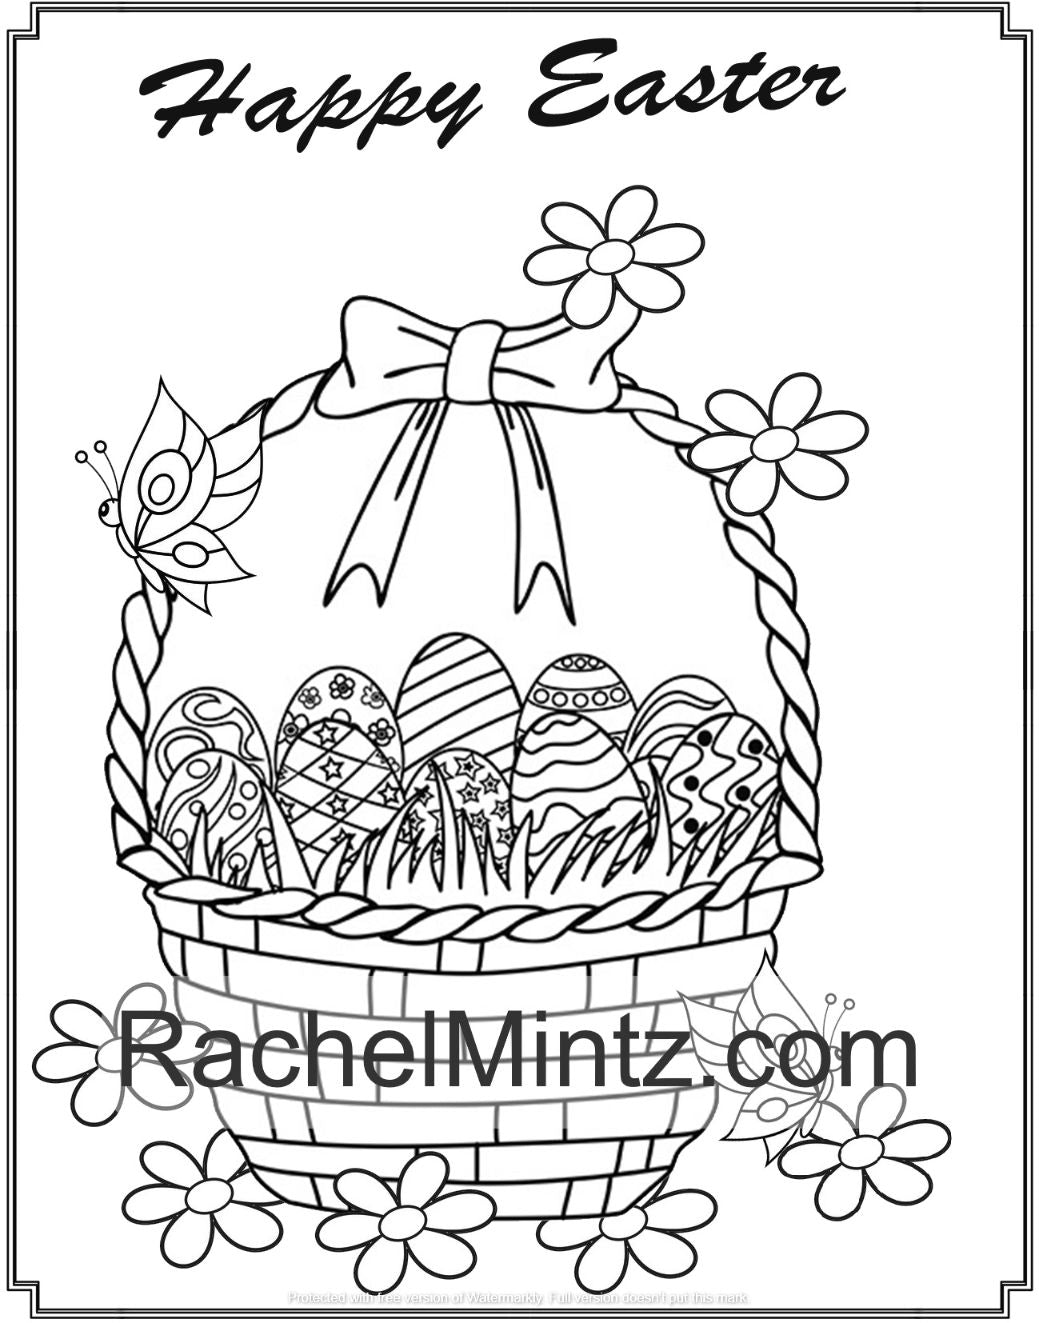 Happy Easter - Easy Coloring Easter Bunny & Eggs (Digital PDF Book)